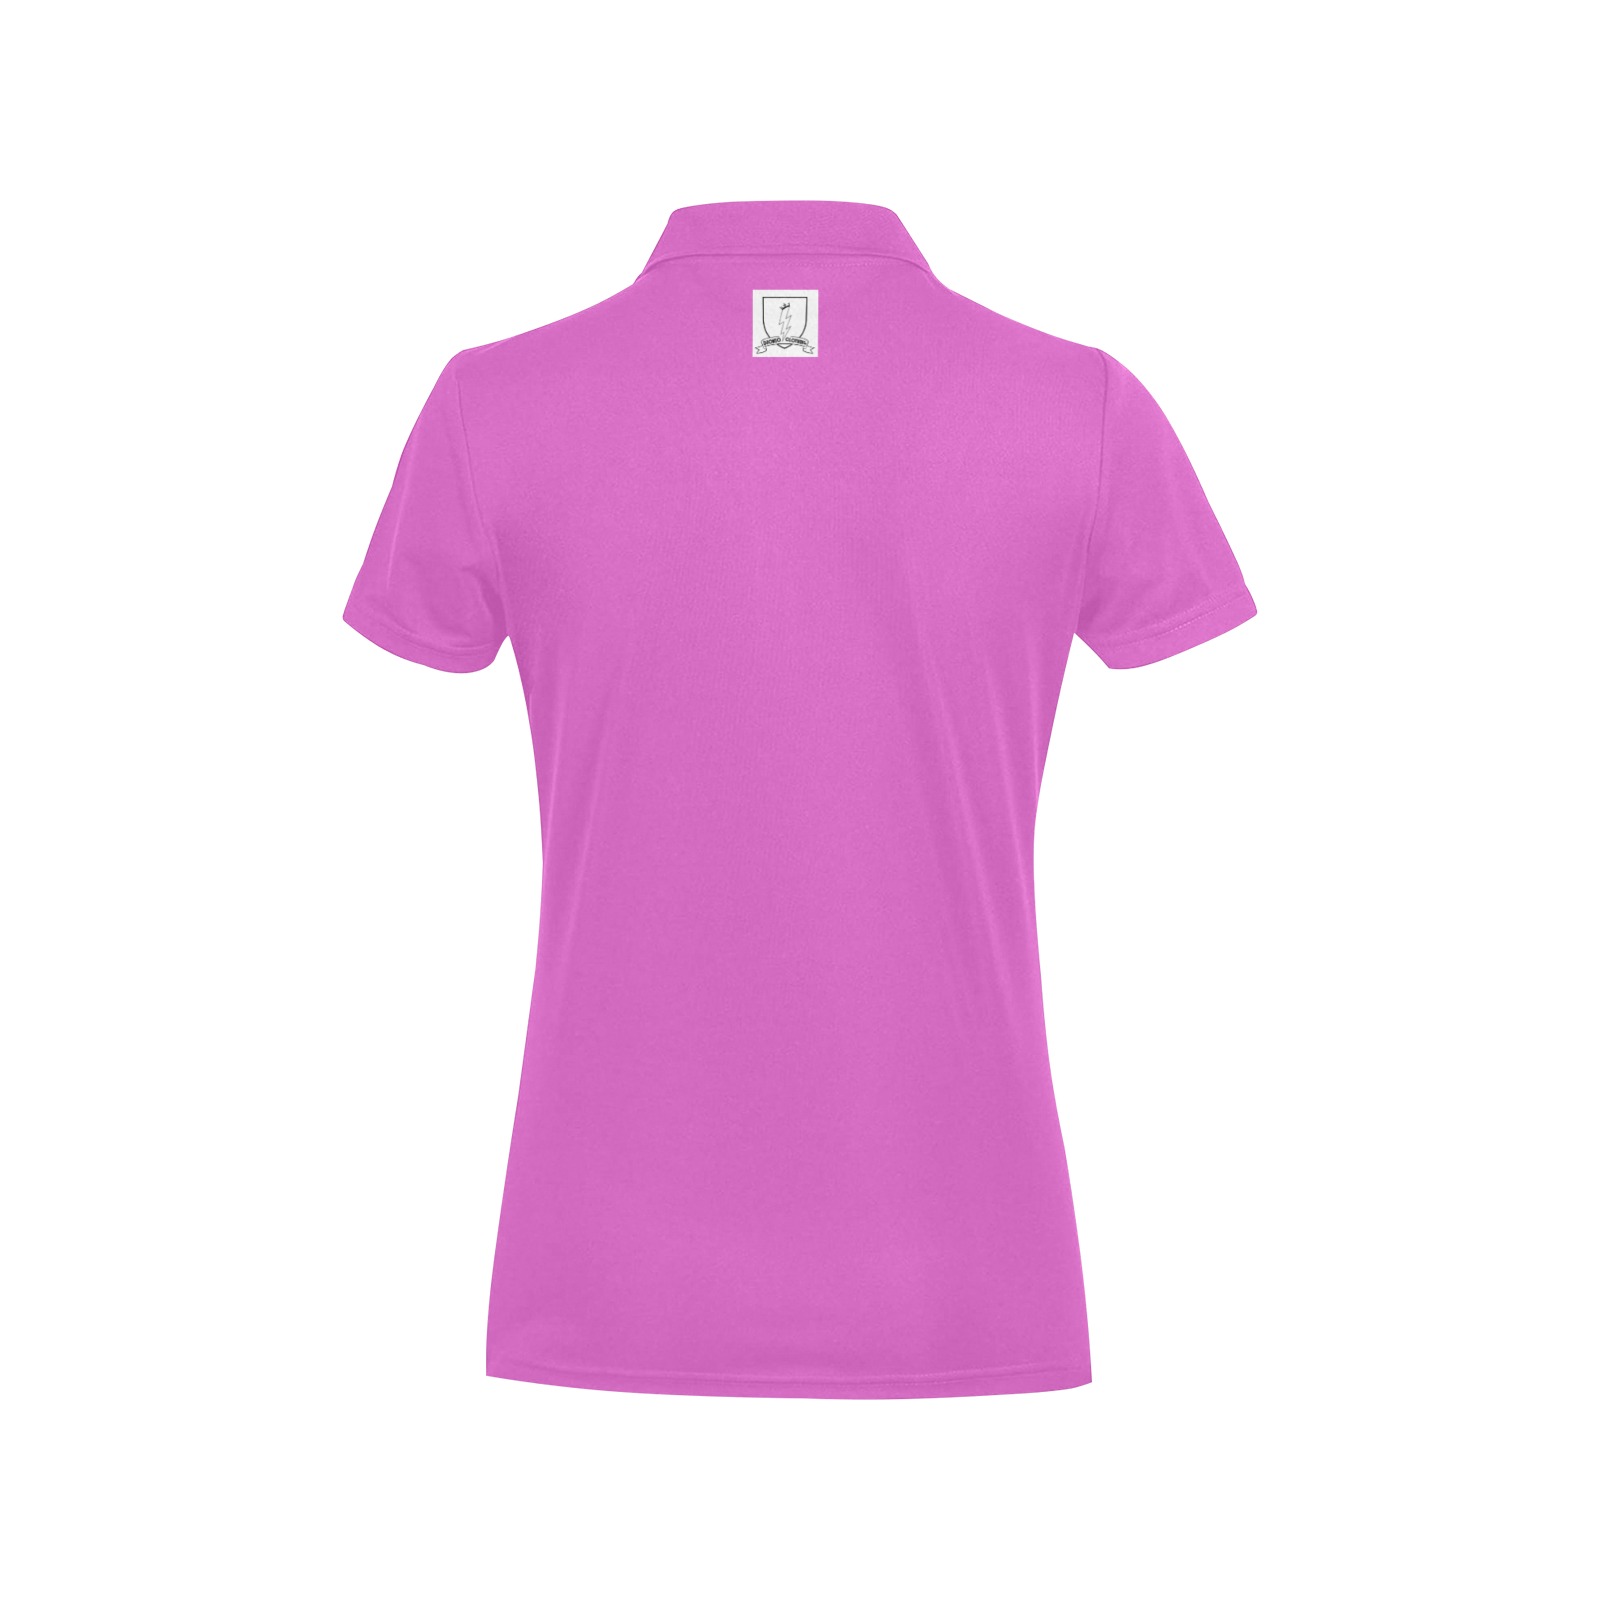 DIONIO Clothing - Women's Polo Shirt (Pink ,White & Black Logo) Women's All Over Print Polo Shirt (Model T55)